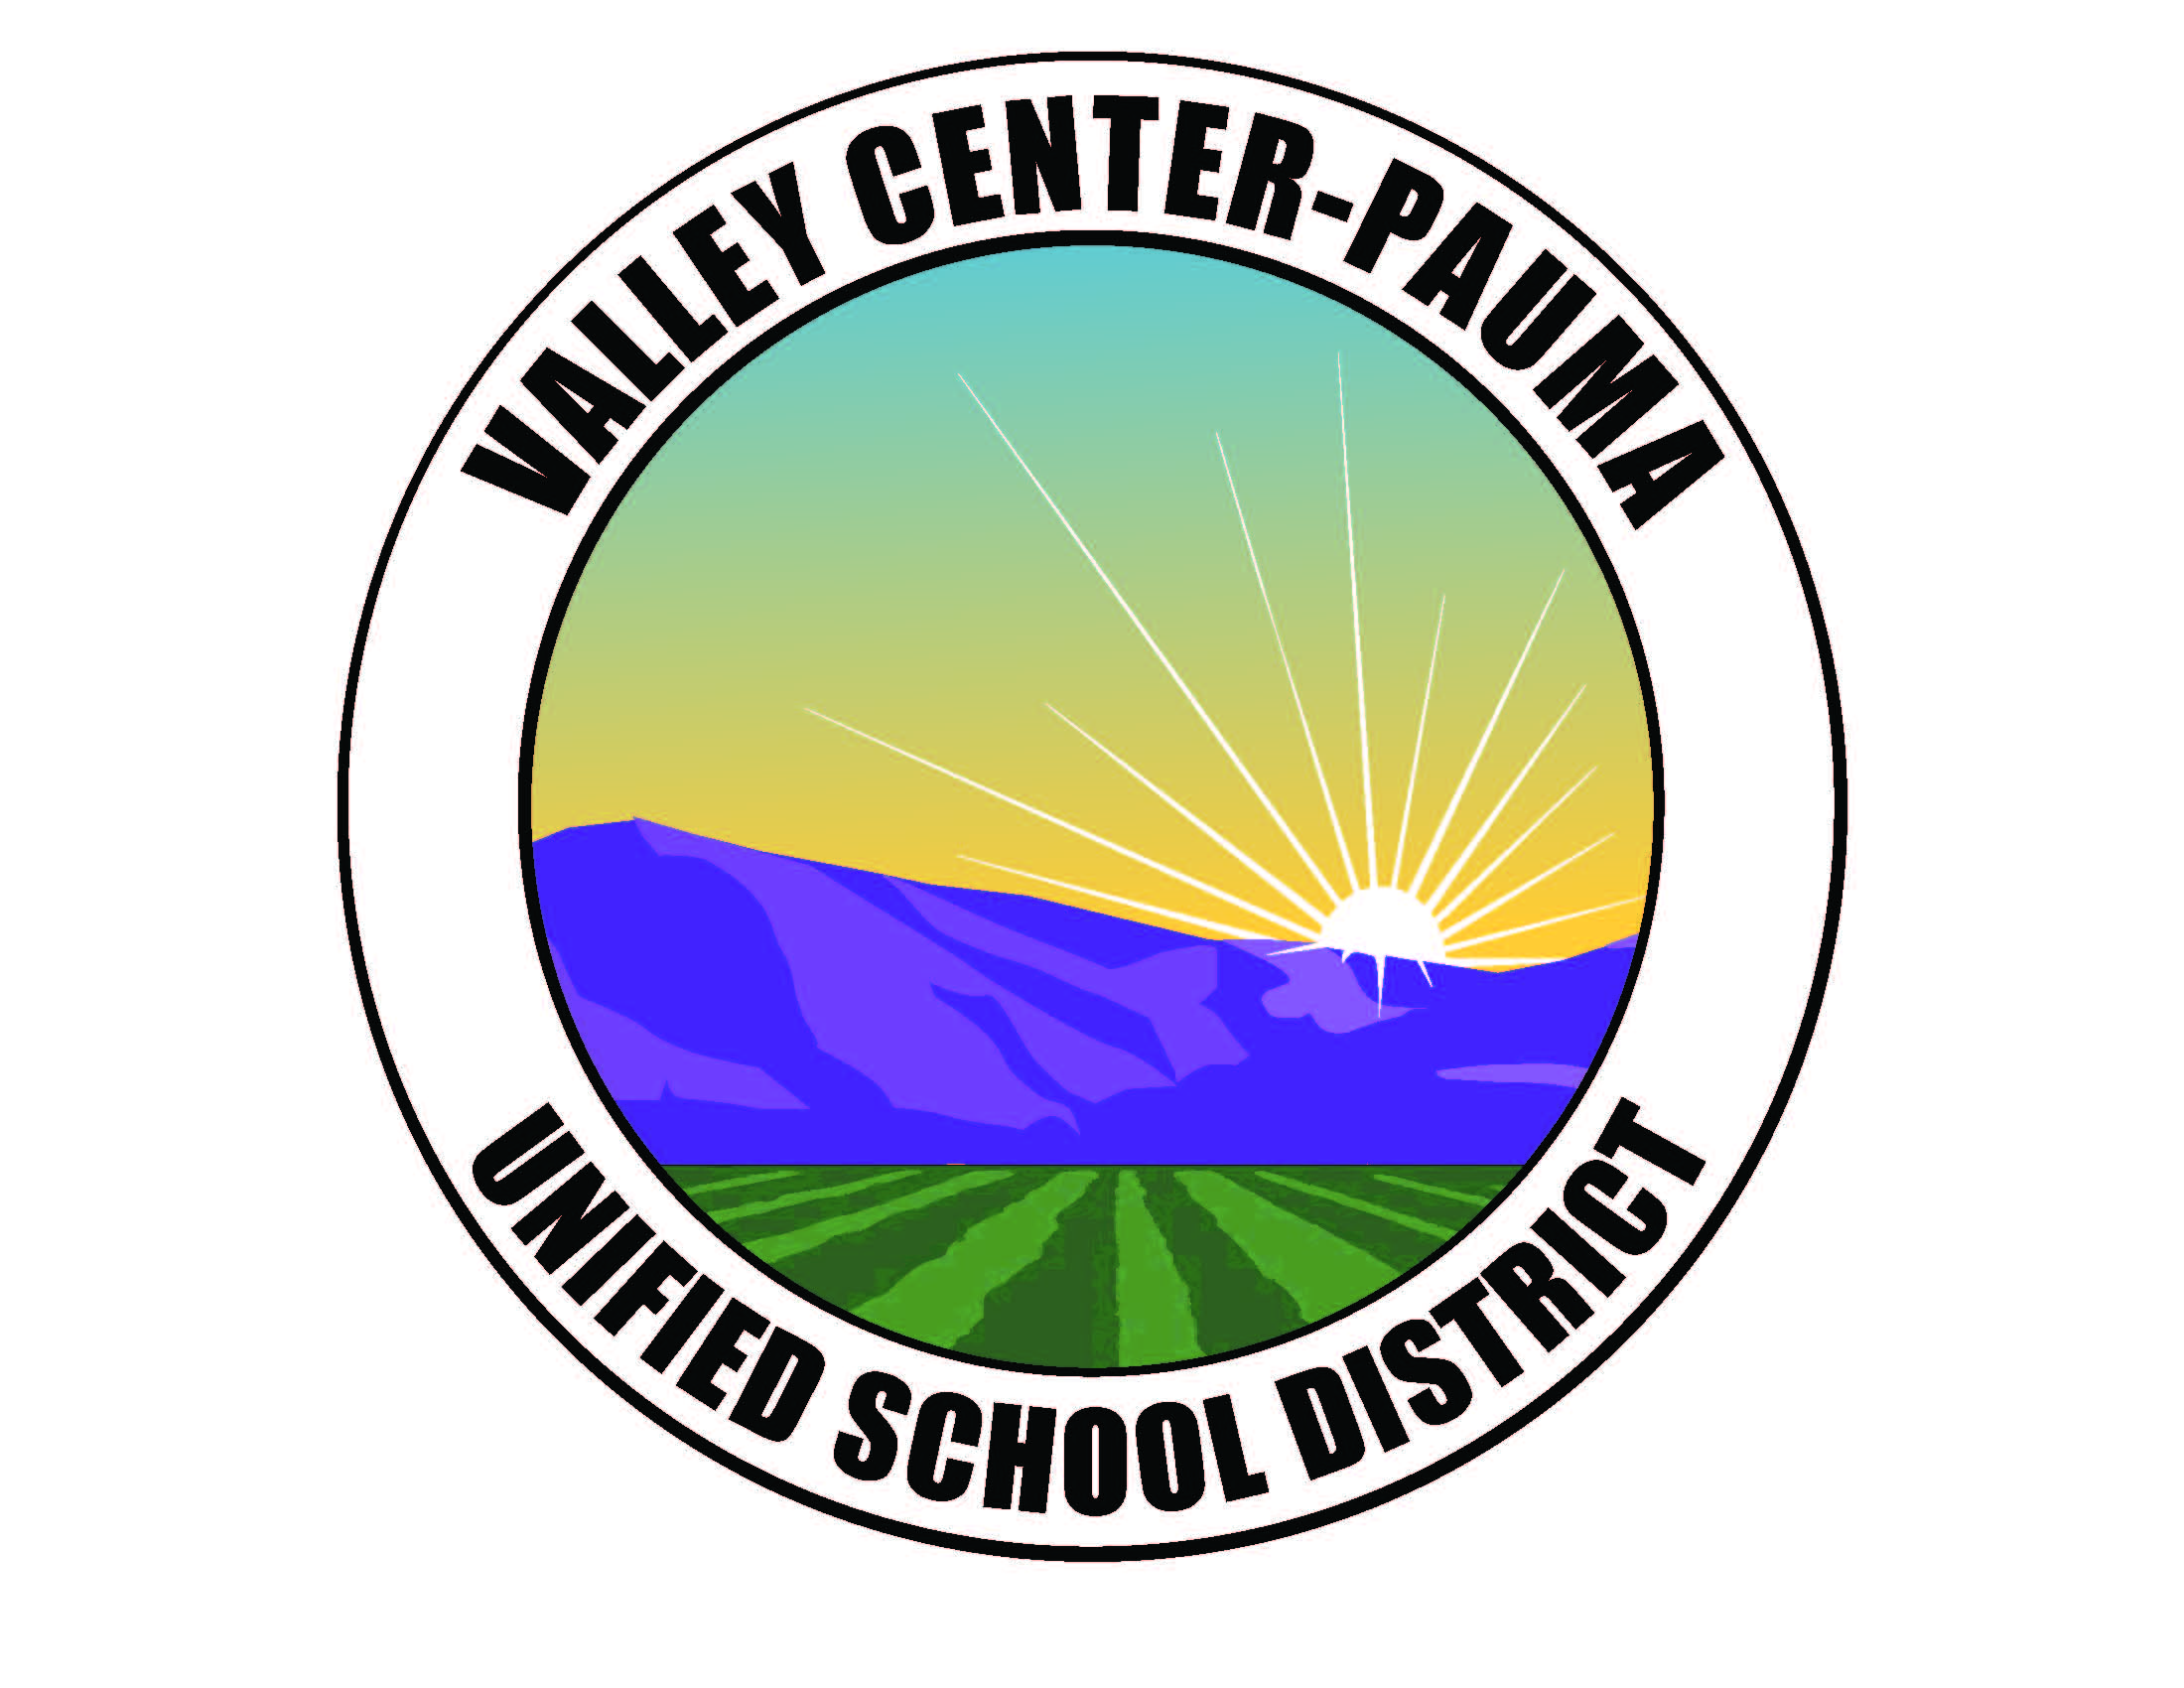 Valley Center-Pauma Unified School District Logo